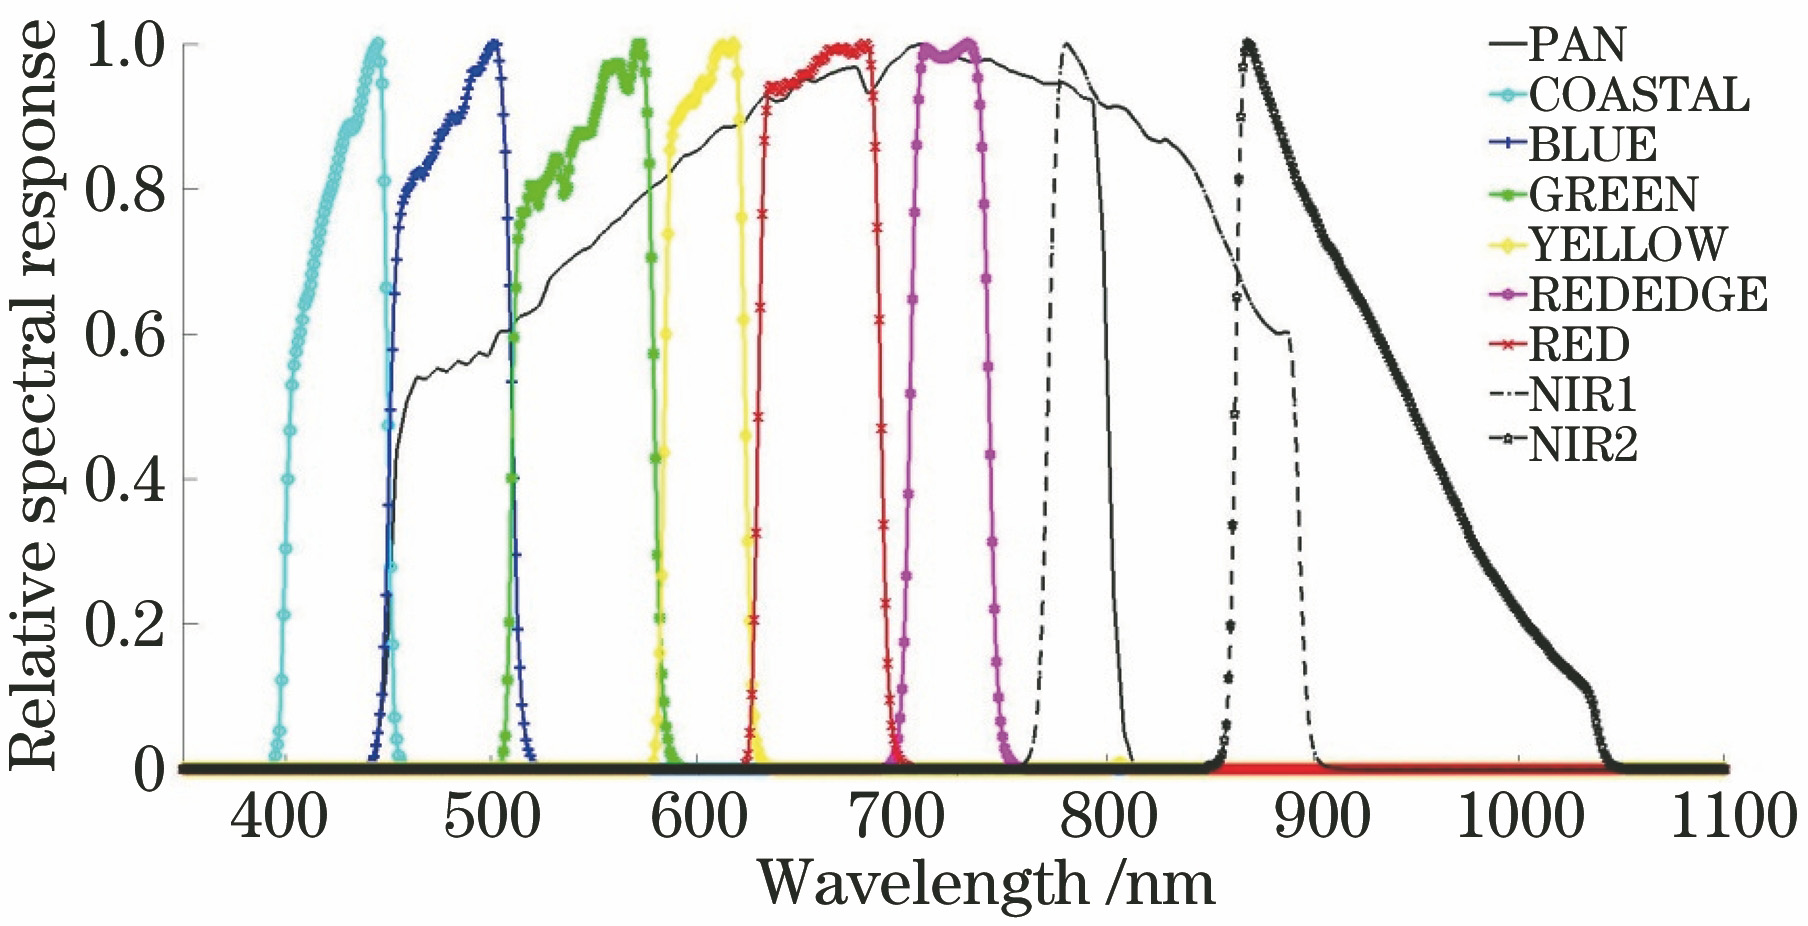 Relative spectral radiance response curves for WV-3 VNIR band